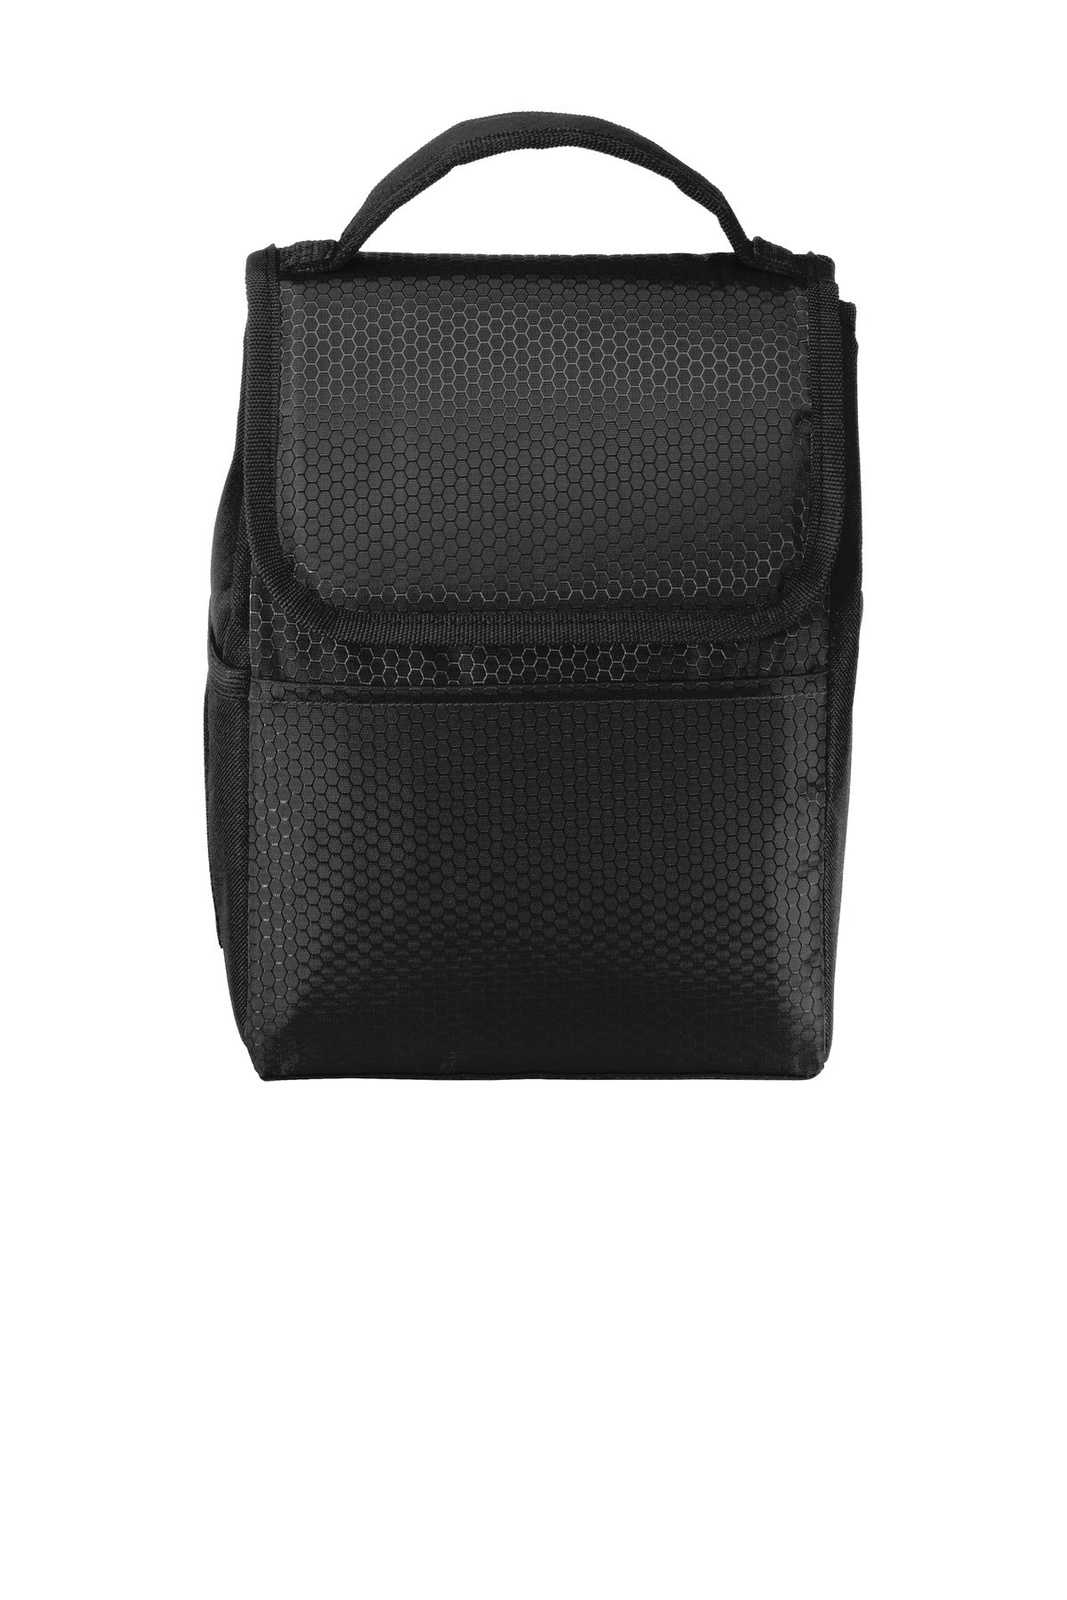 Port Authority BG500 Lunch Bag Cooler - Black Black - HIT a Double - 1